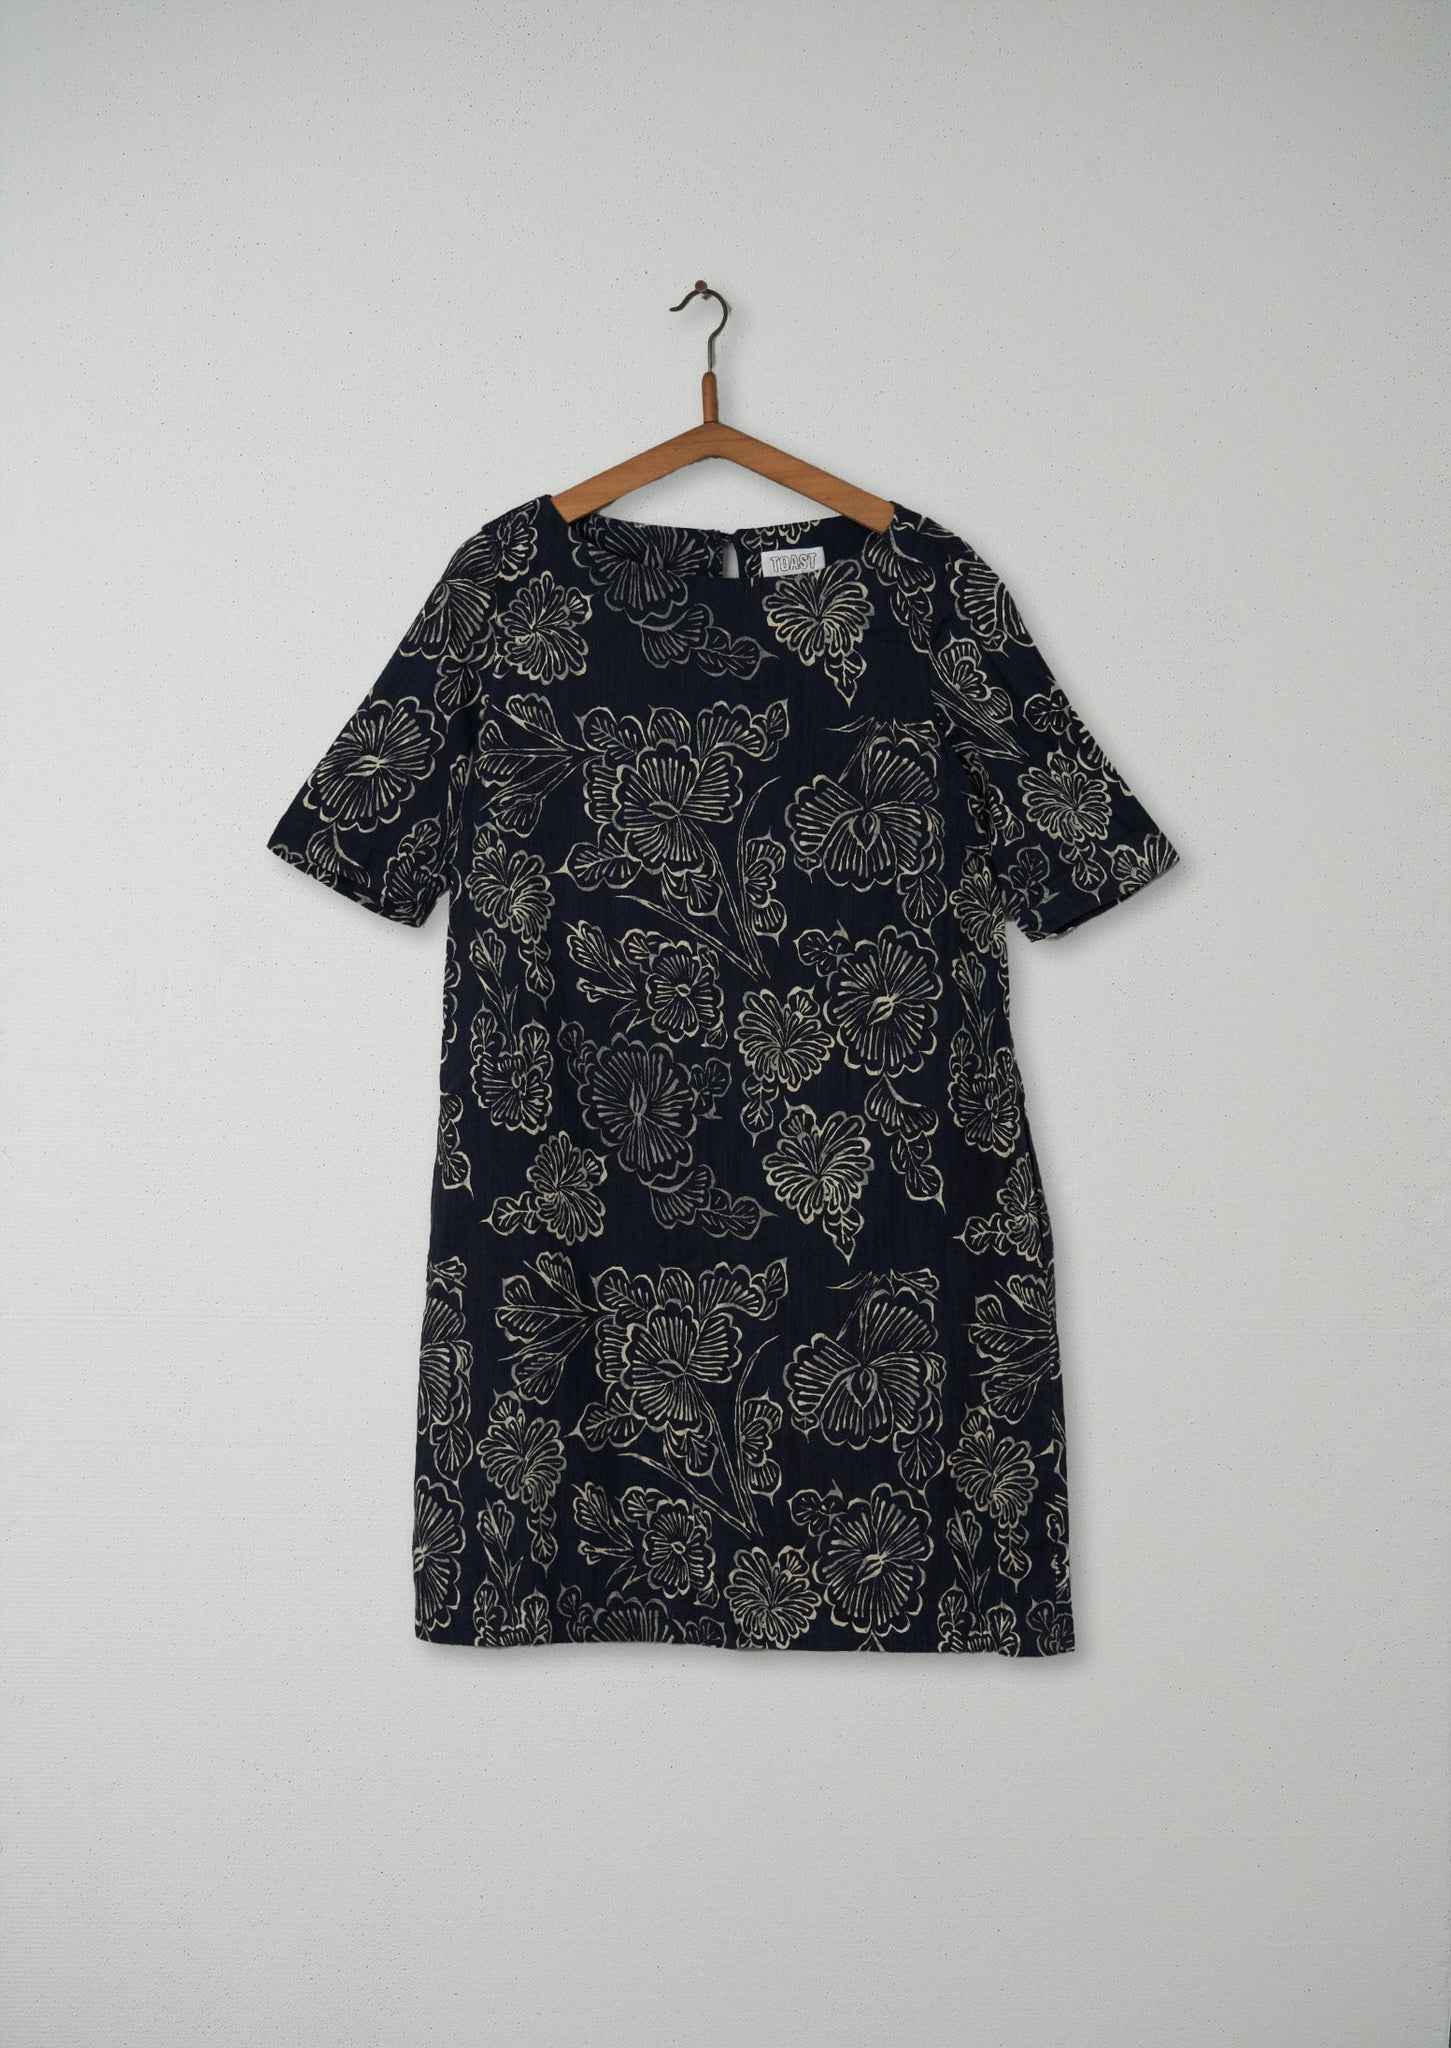 Reworn Batik Print Dress Size 10 (118) | Indigo/Off White